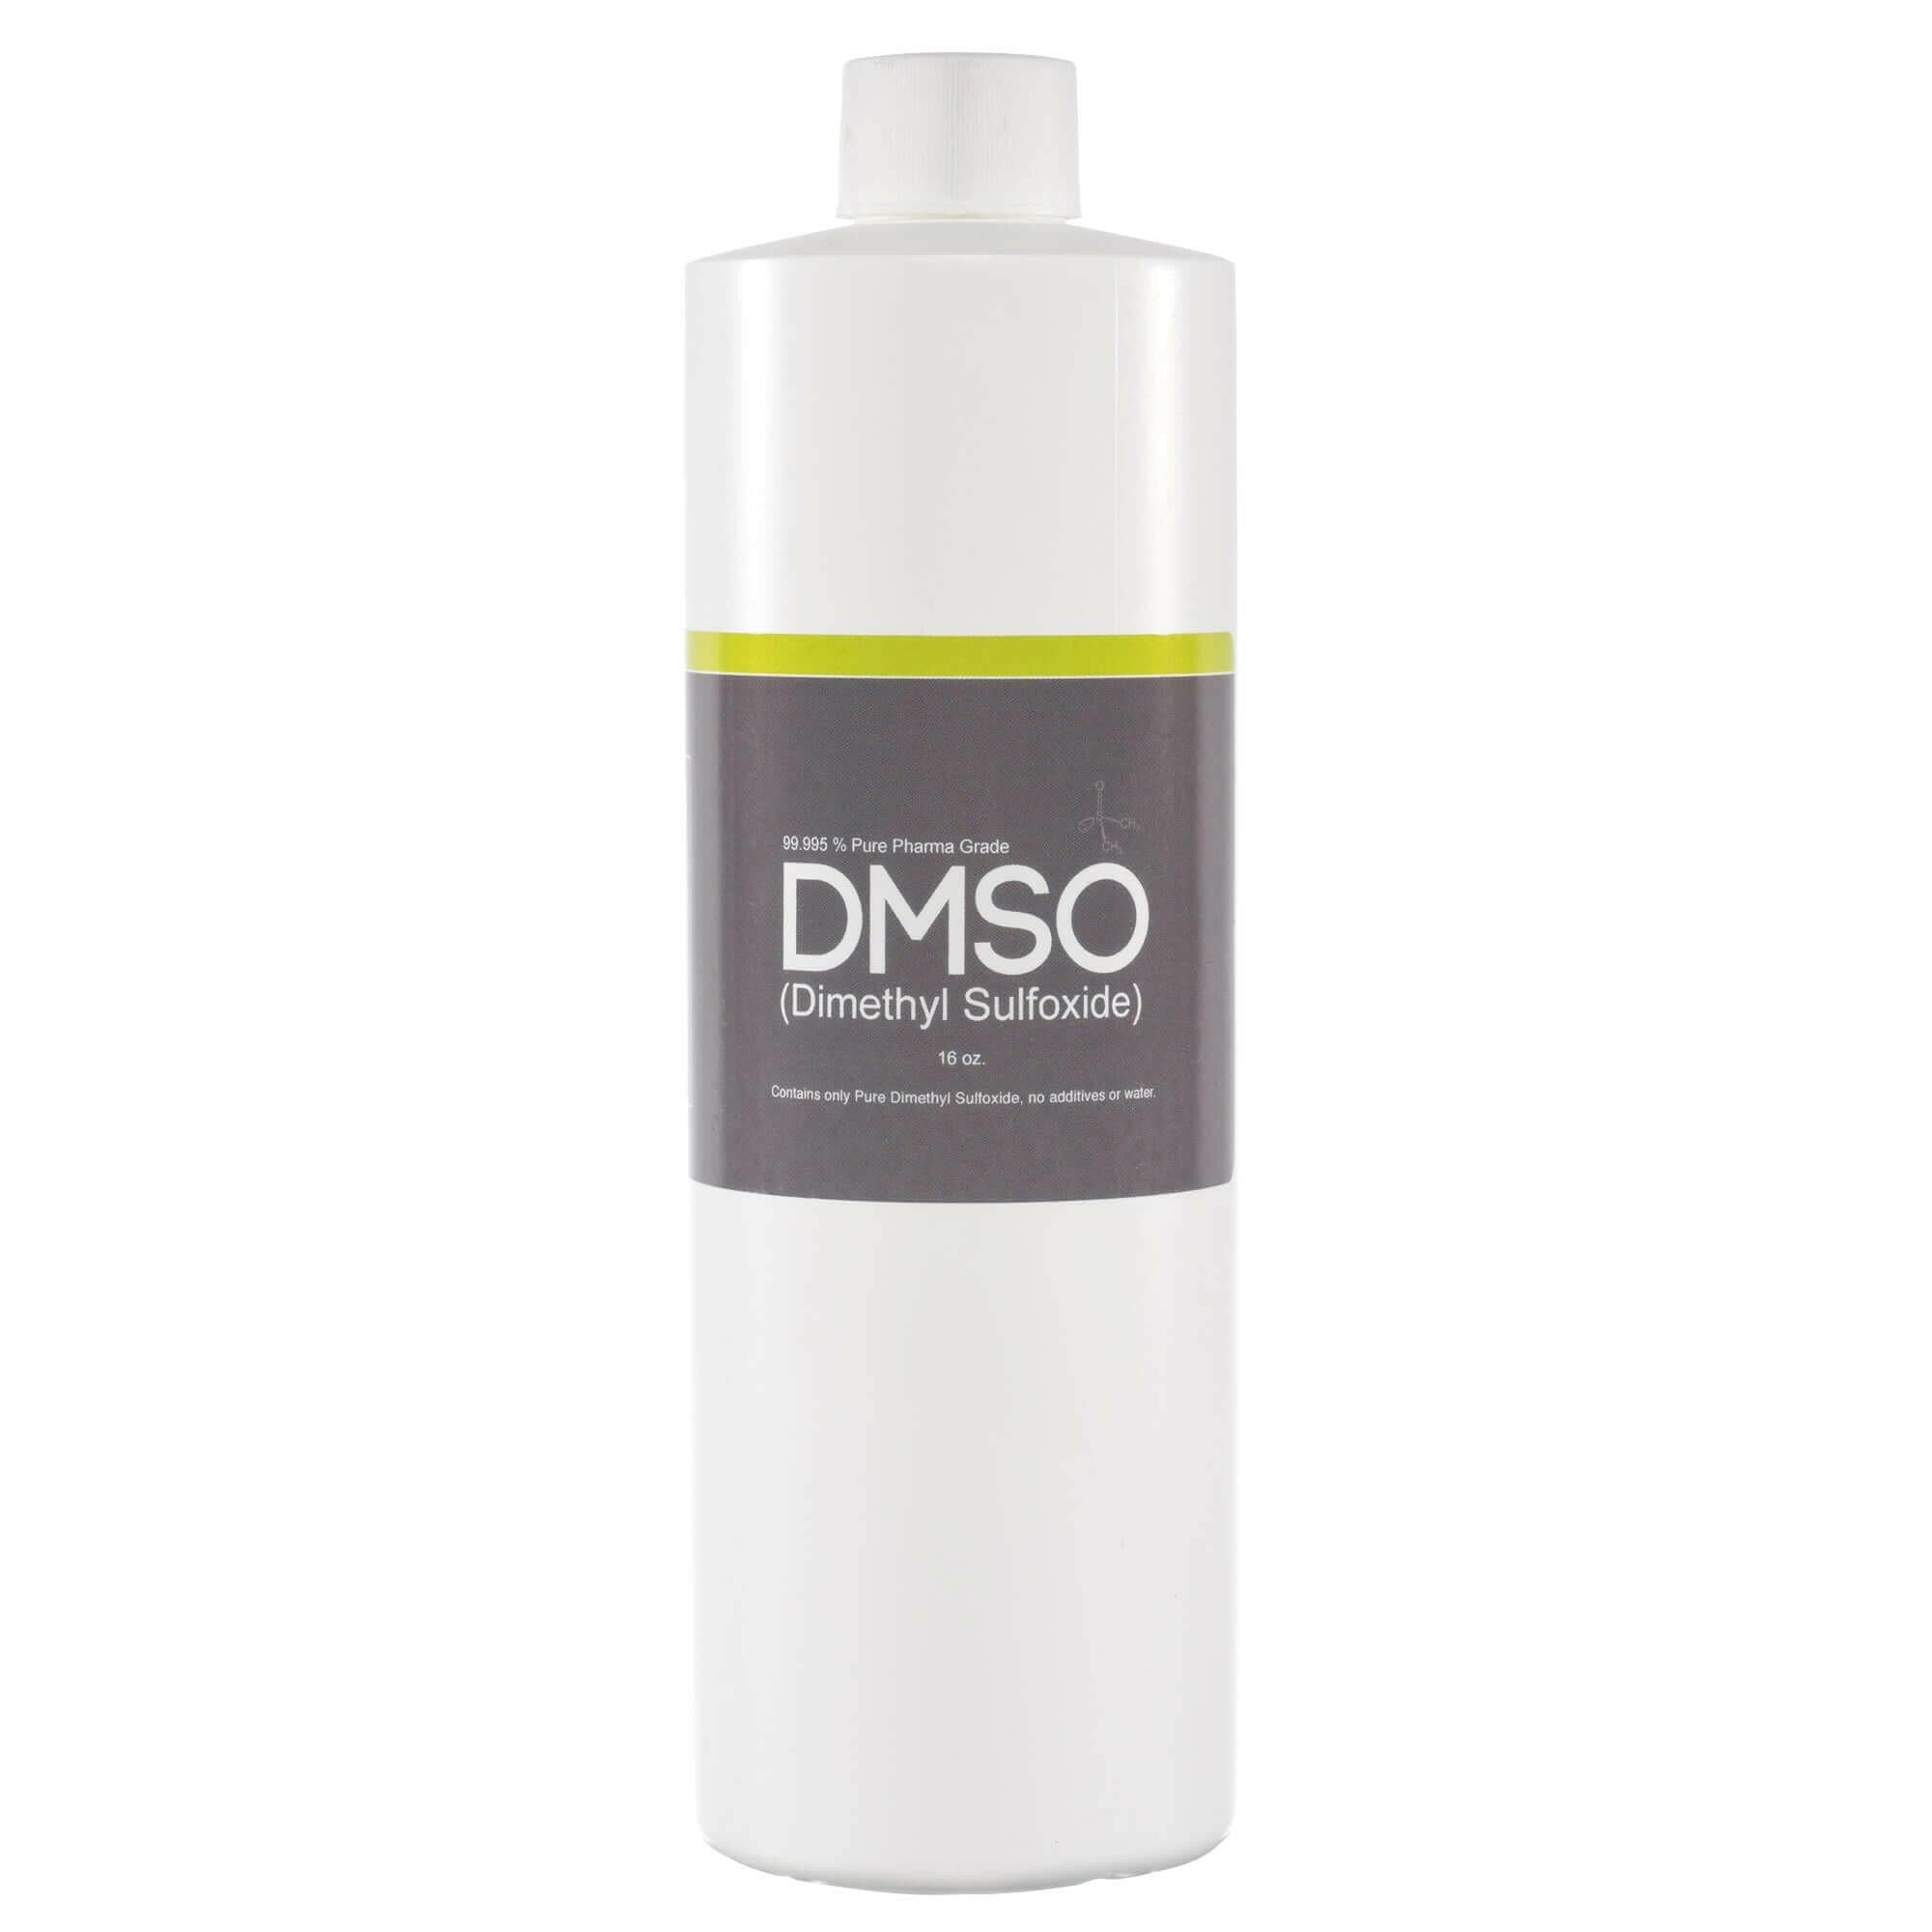 DMSO - Ultra Pure 99.995% Dimethyl Sulfoxide, Detox